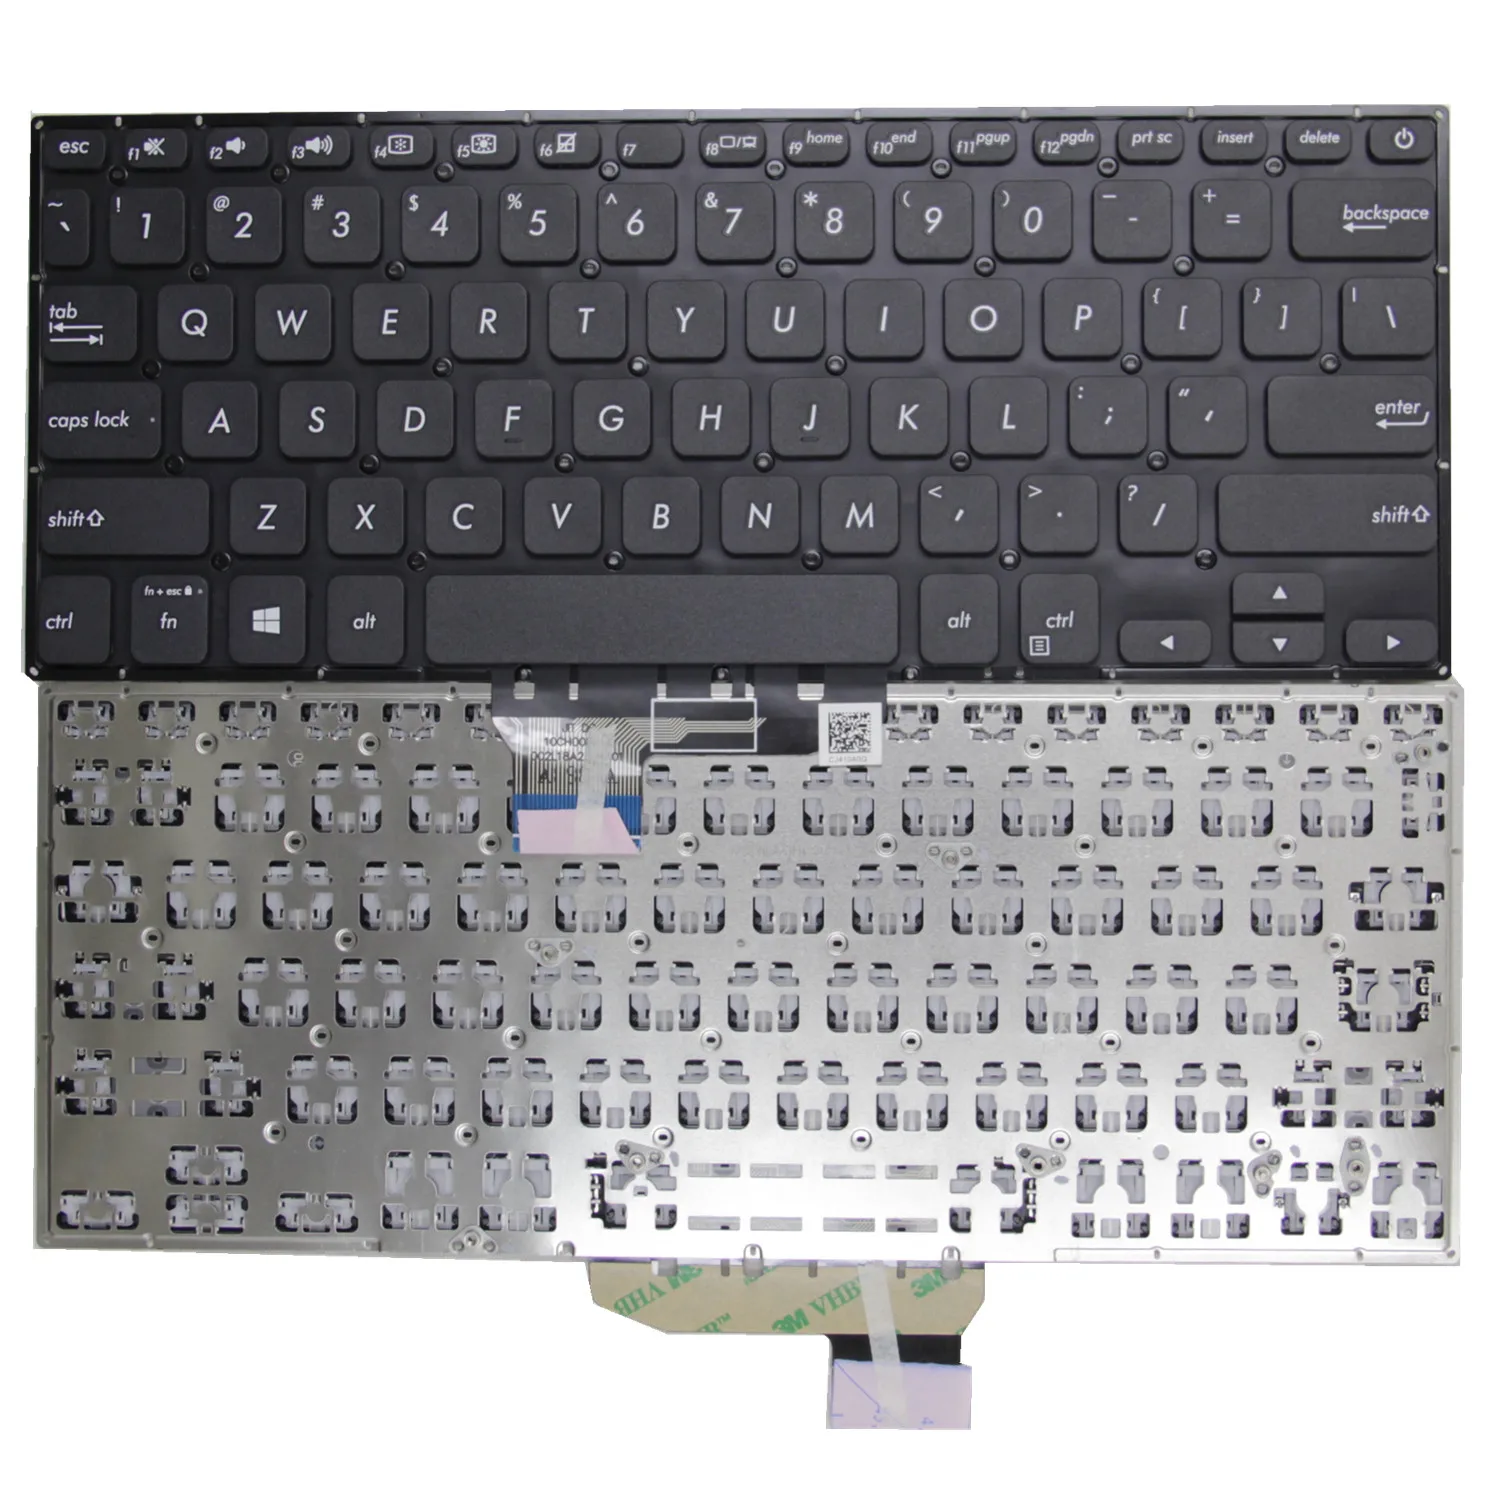 NEW Original US For Asus Vivobook S14 S4300U K430 A430 X430 S403 S430 S4300F S4300 X430U English Laptop Keyboard Backlight enlarge